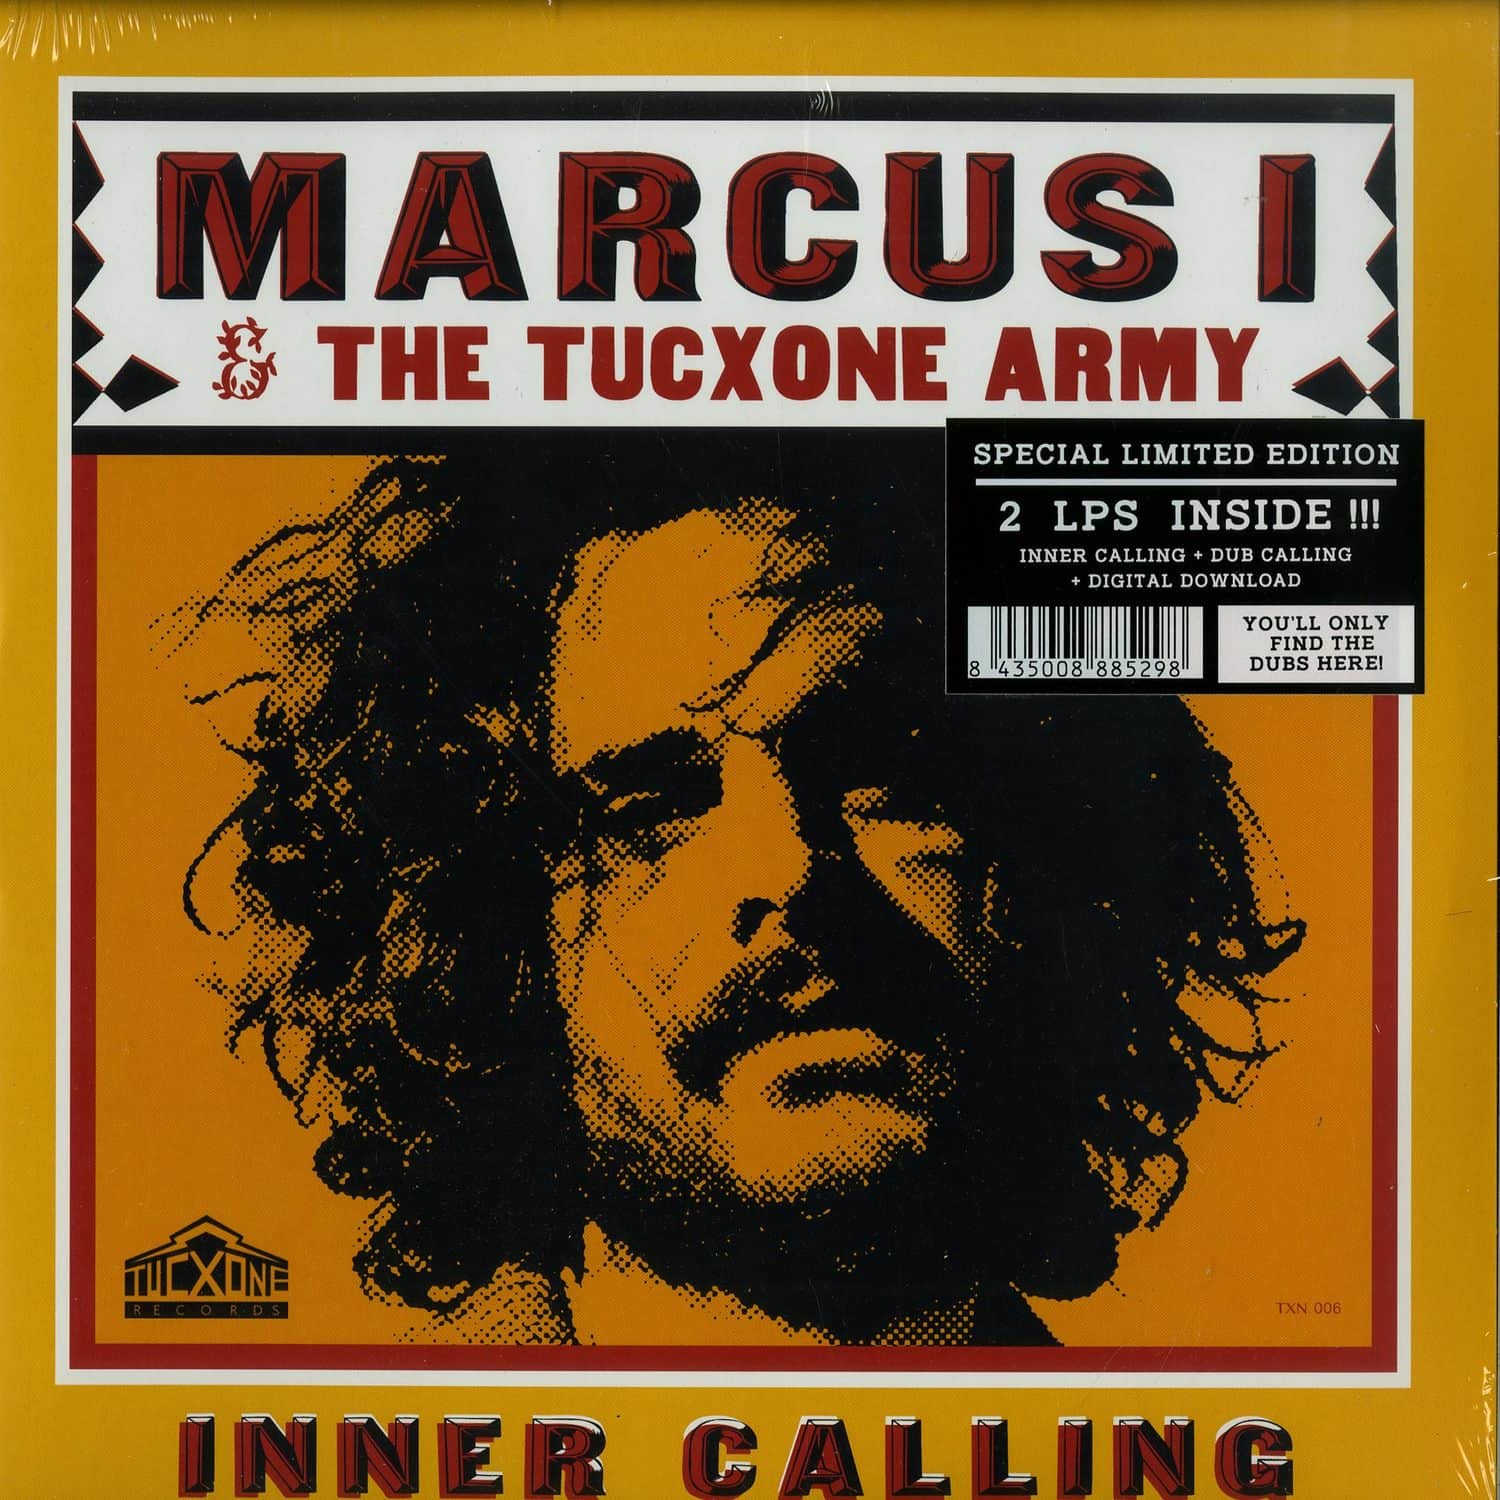 Marcus I & The Tucxone Army - INNER CALLING 